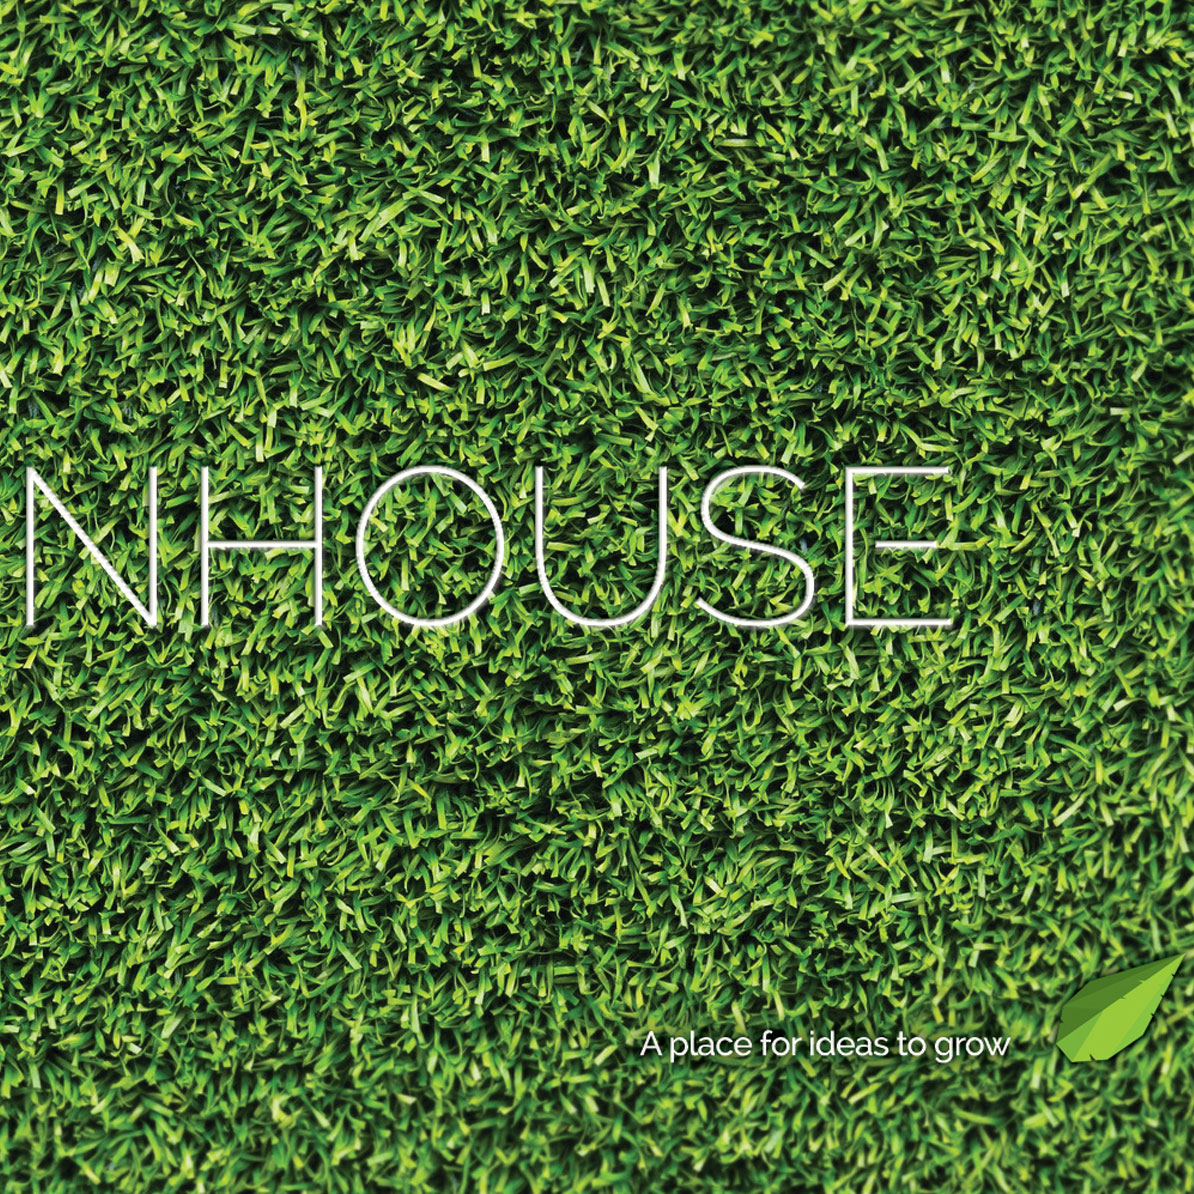 Bisk Office Redesign - Greenhouse